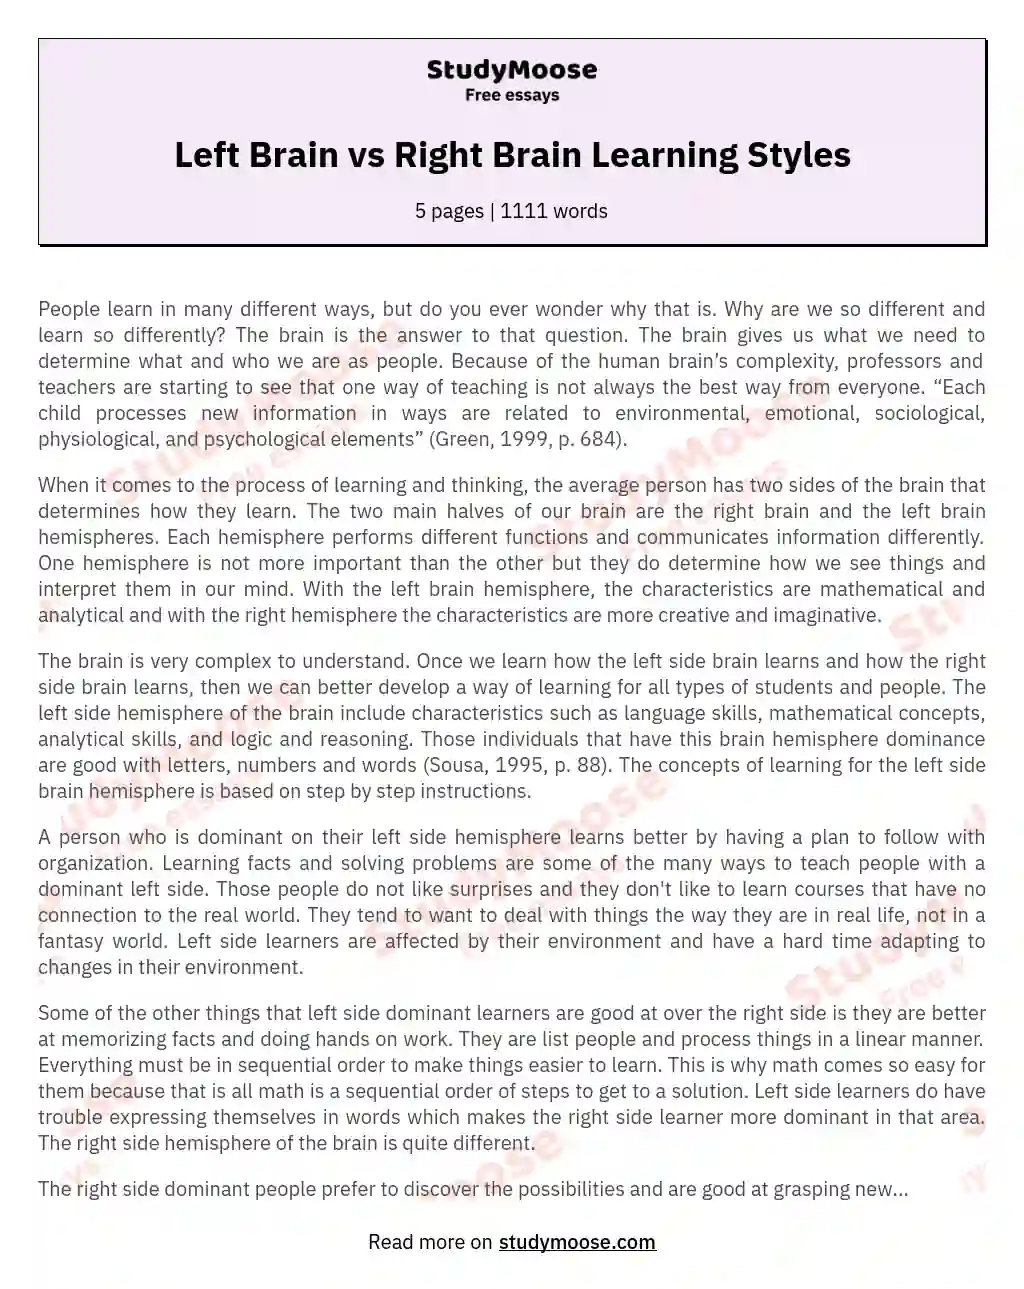 Left Brain vs Right Brain Learning Styles